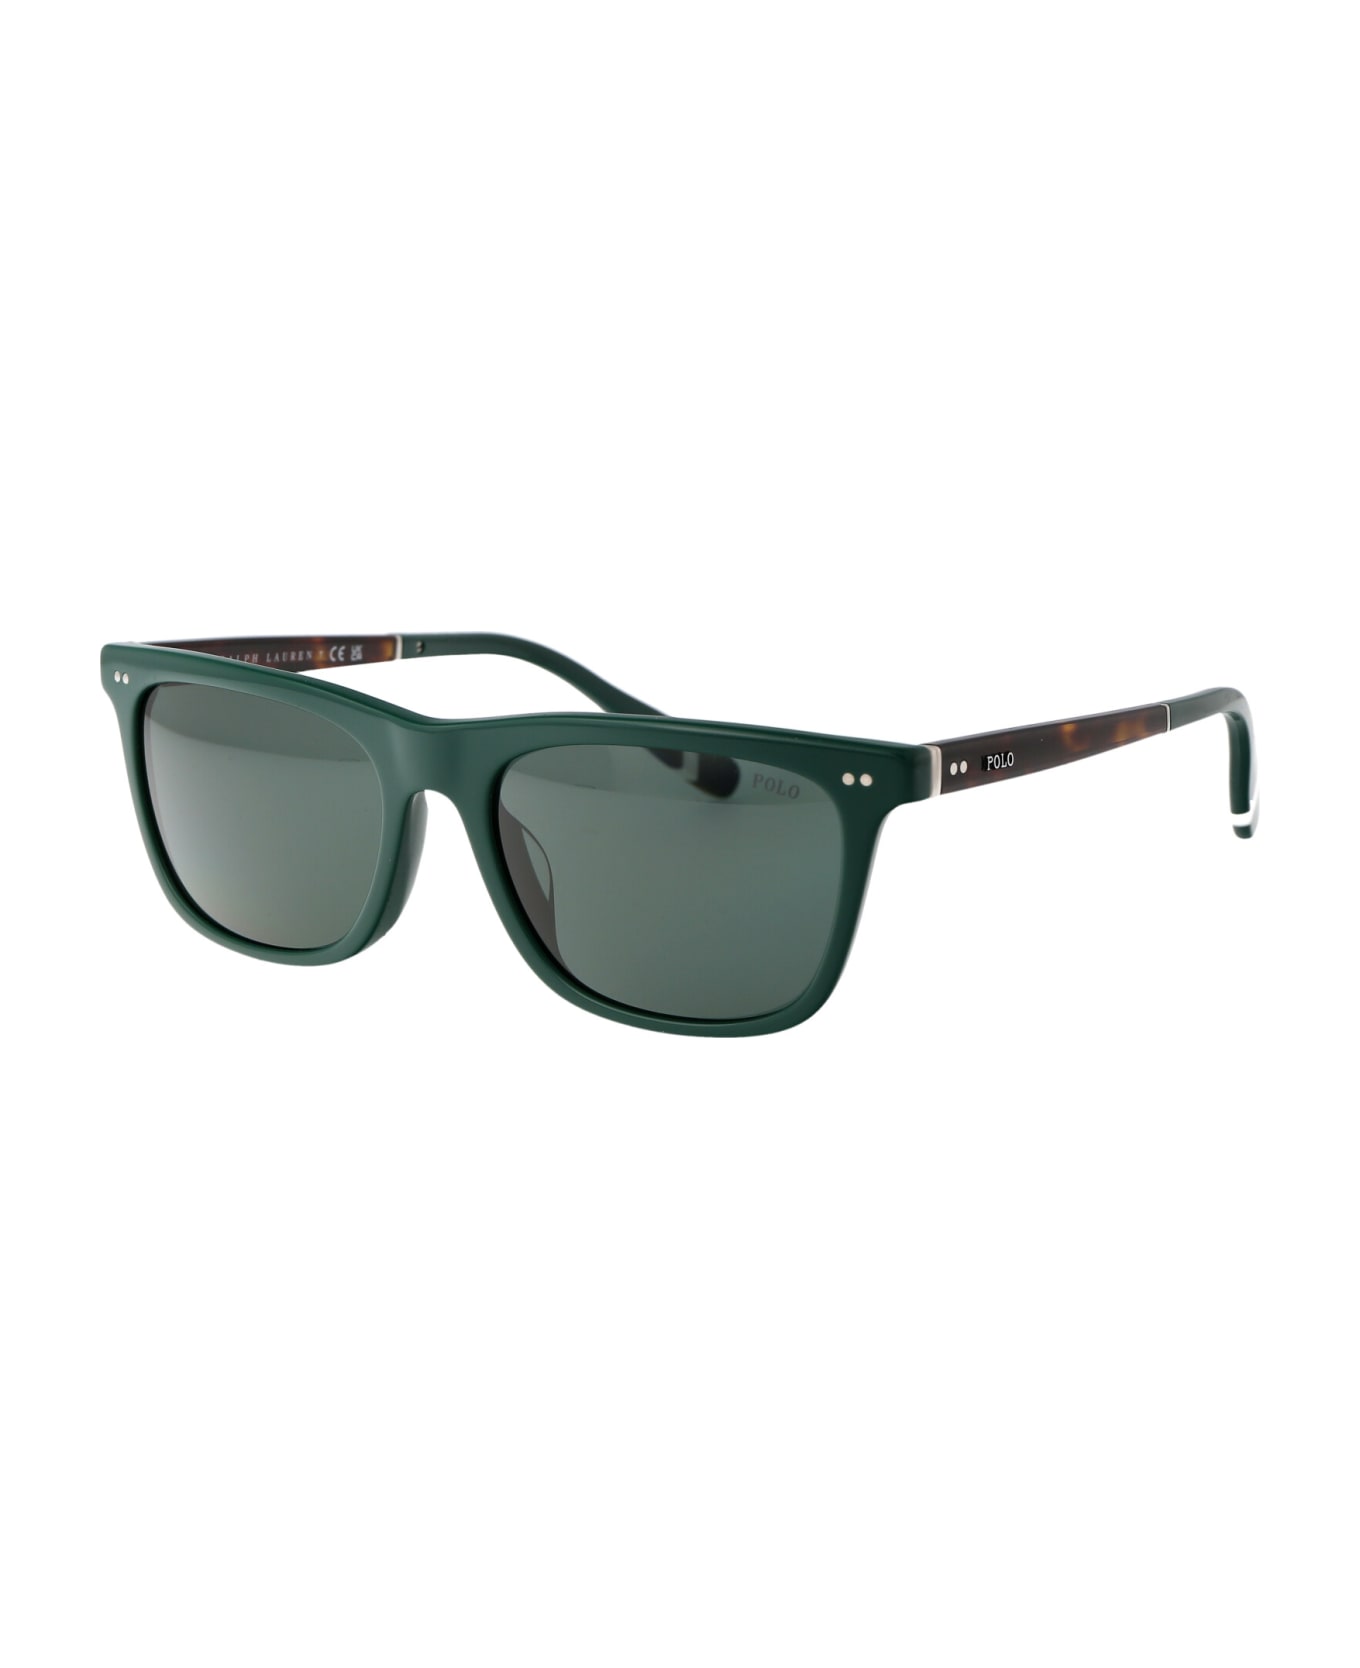 Polo Ralph Lauren 0ph4205u Sunglasses - 614171 Shiny Green サングラス